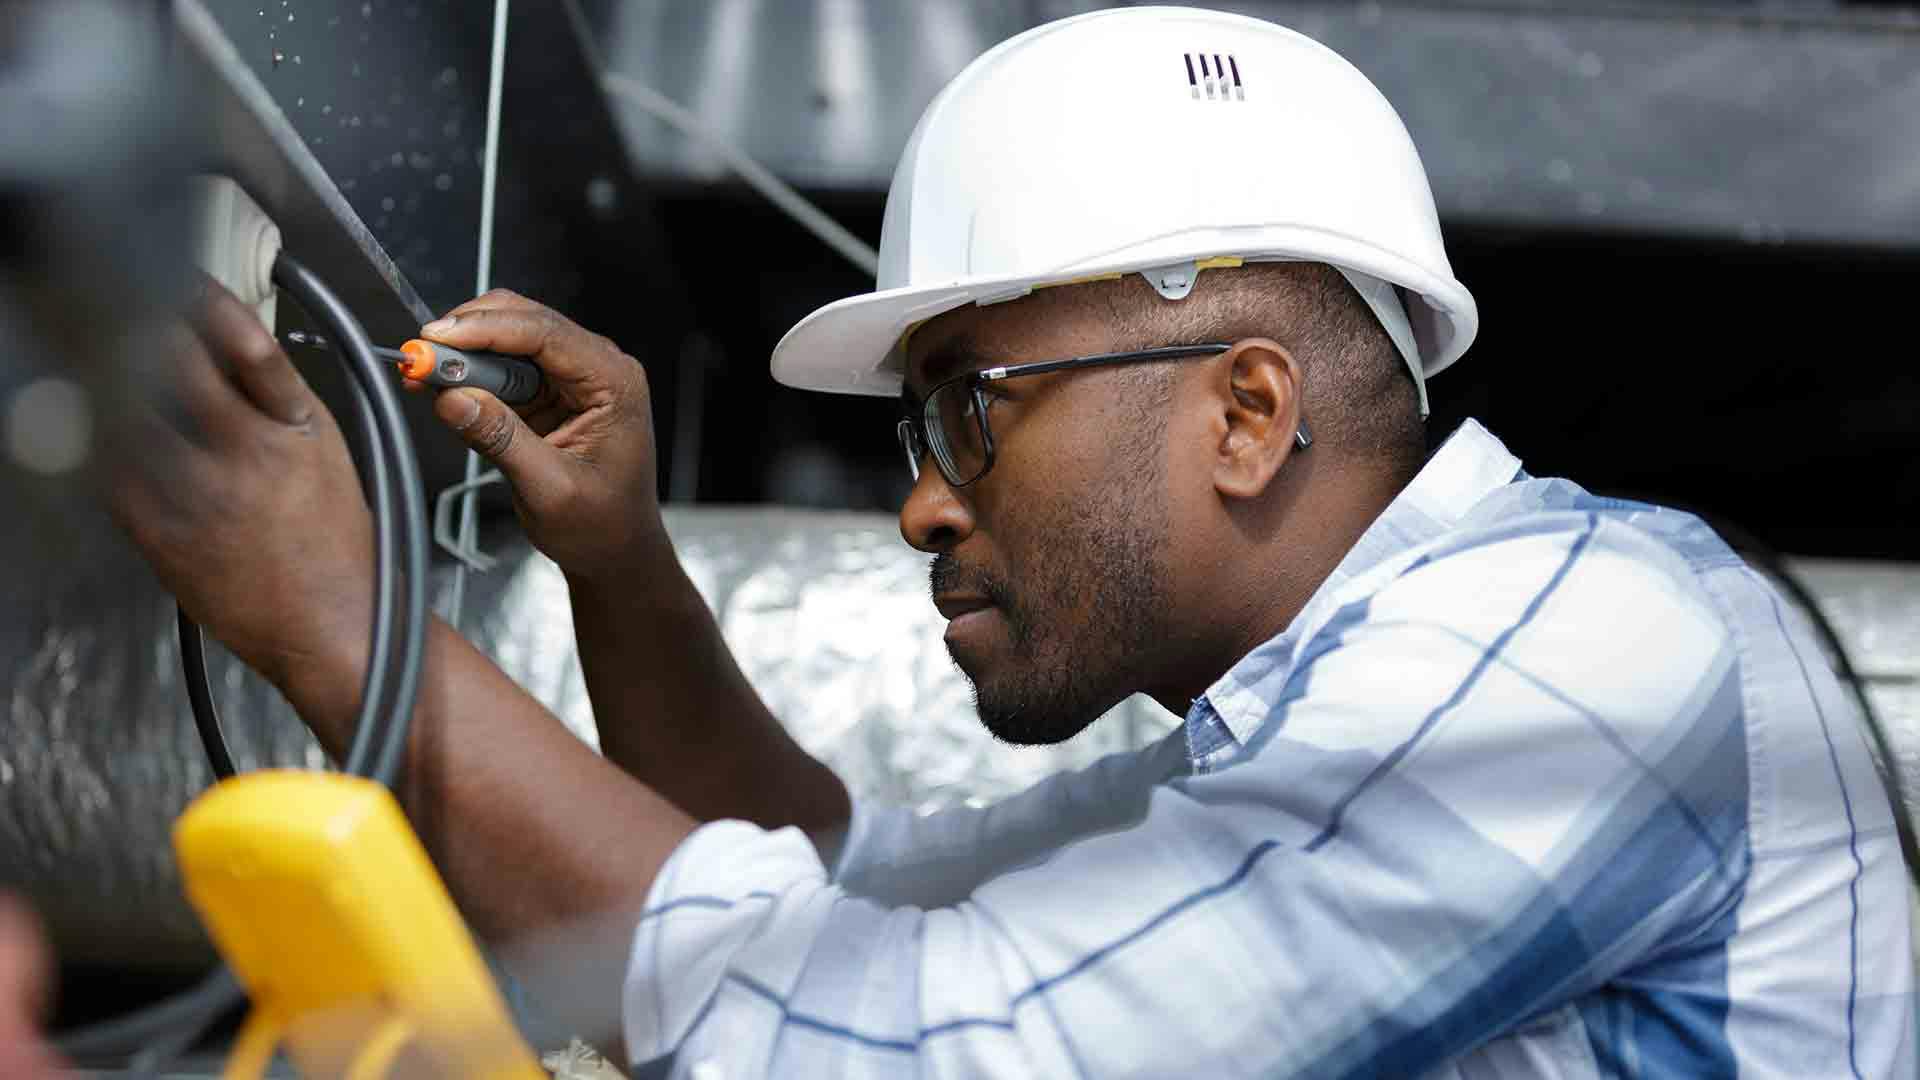 Electrician using digital multi-meter to check a circuit breaker